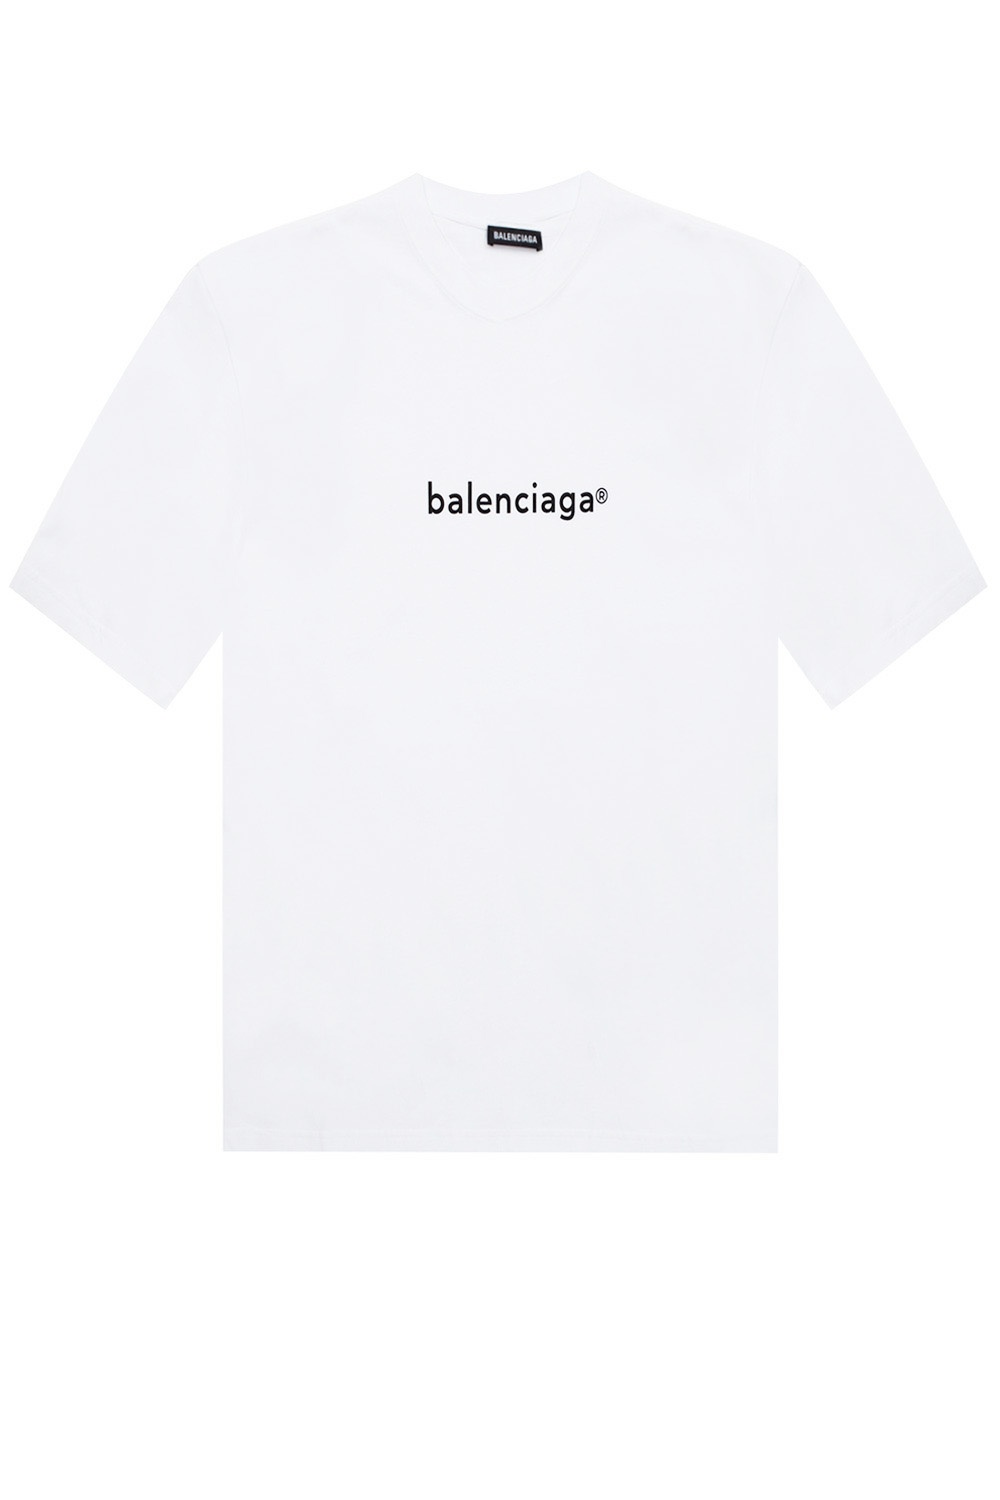 balenciaga t shirt price singapore